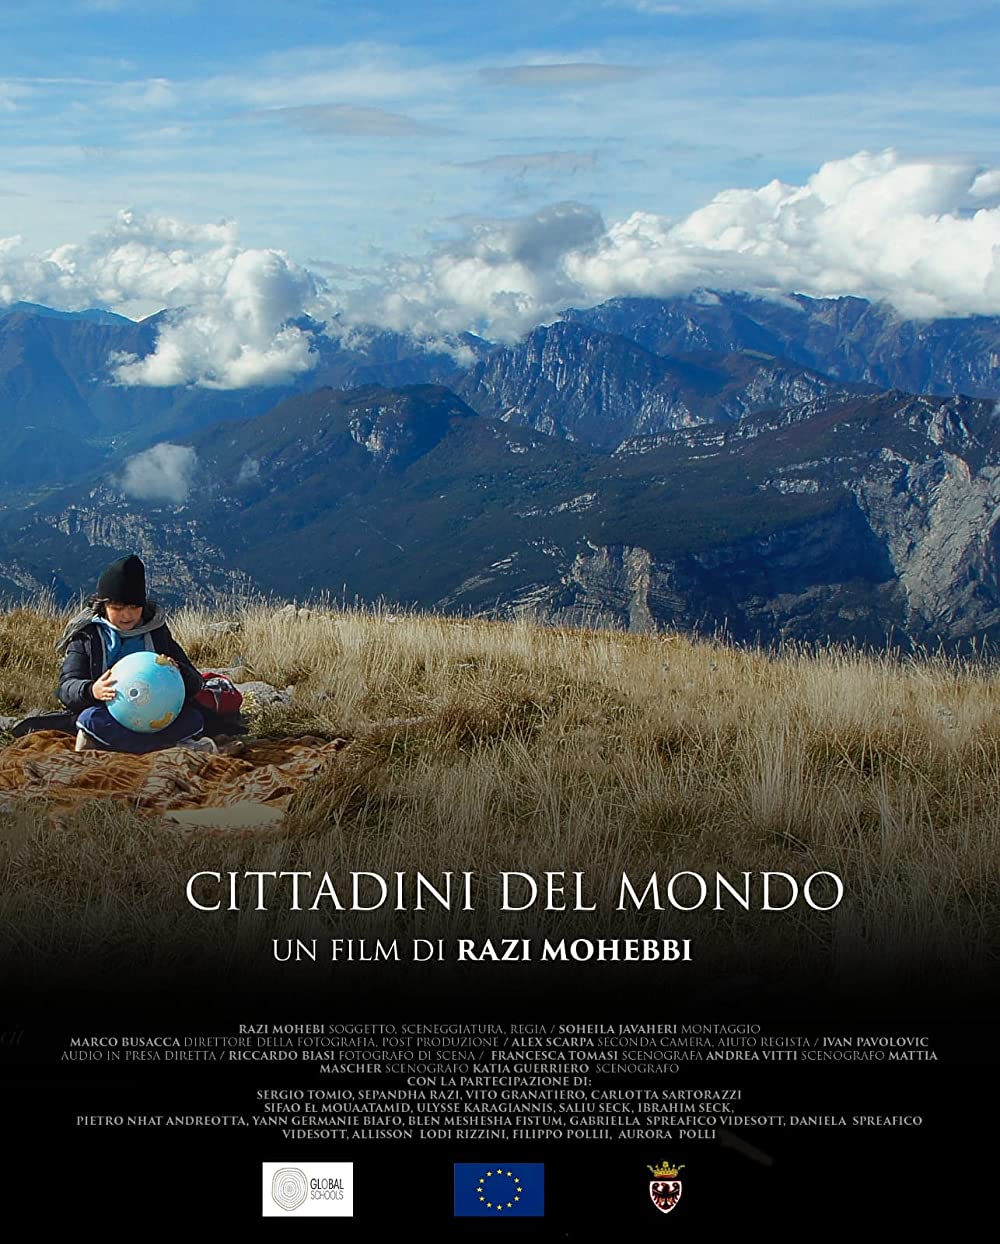 Filmbeschreibung zu Cittadini del mondo (OV)